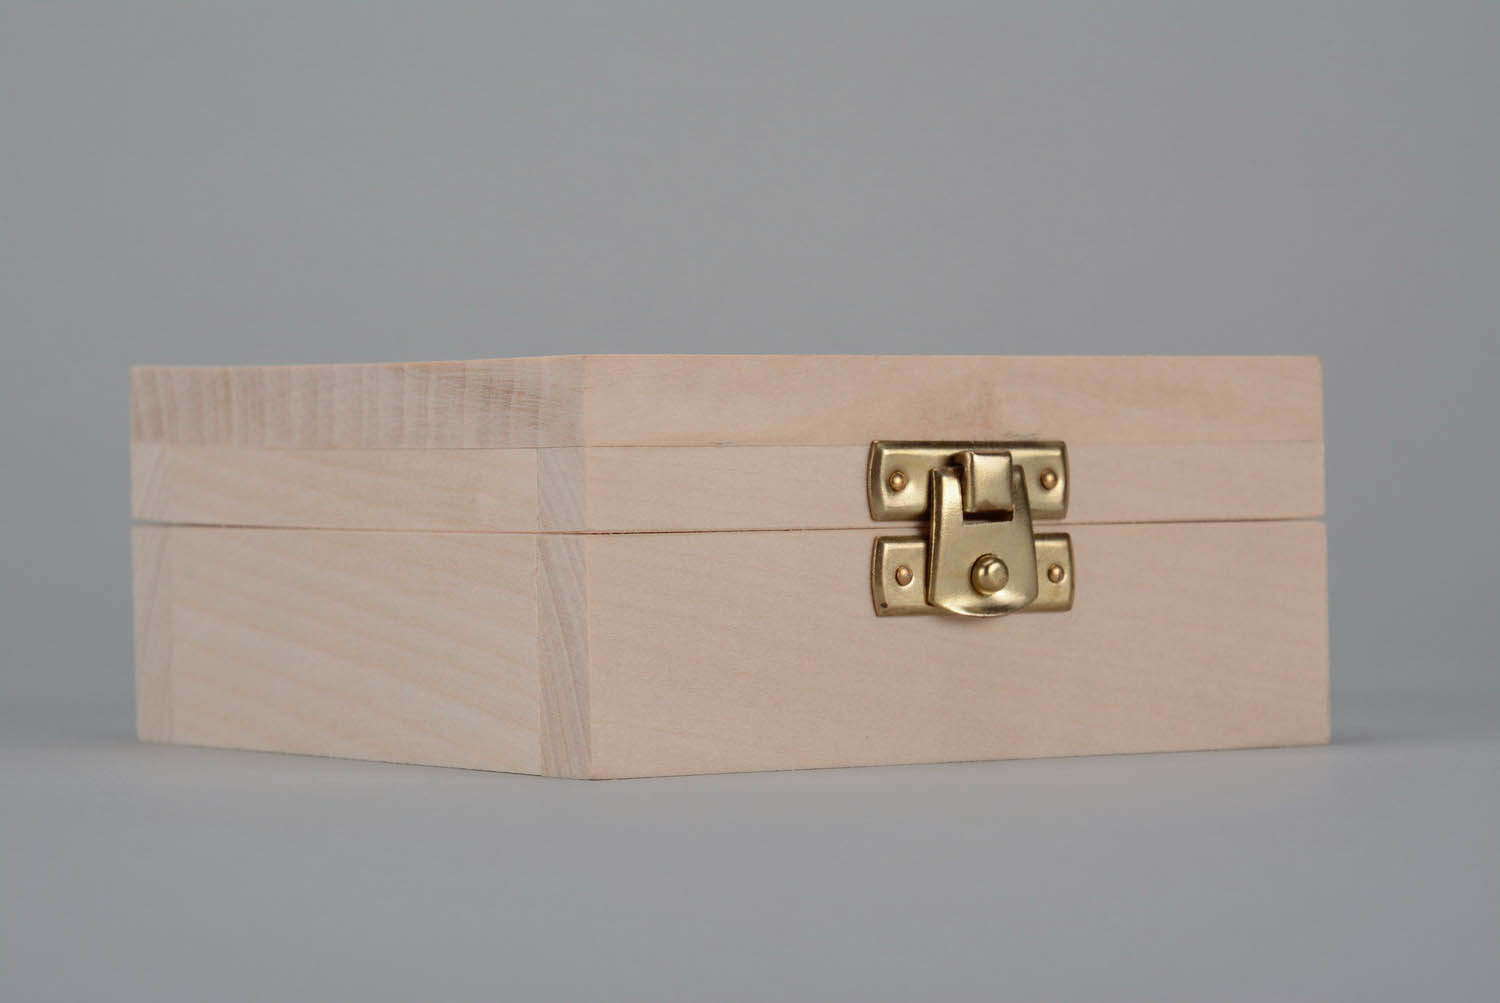 Caja de madera con acabado de terciopelo por dentro foto 2